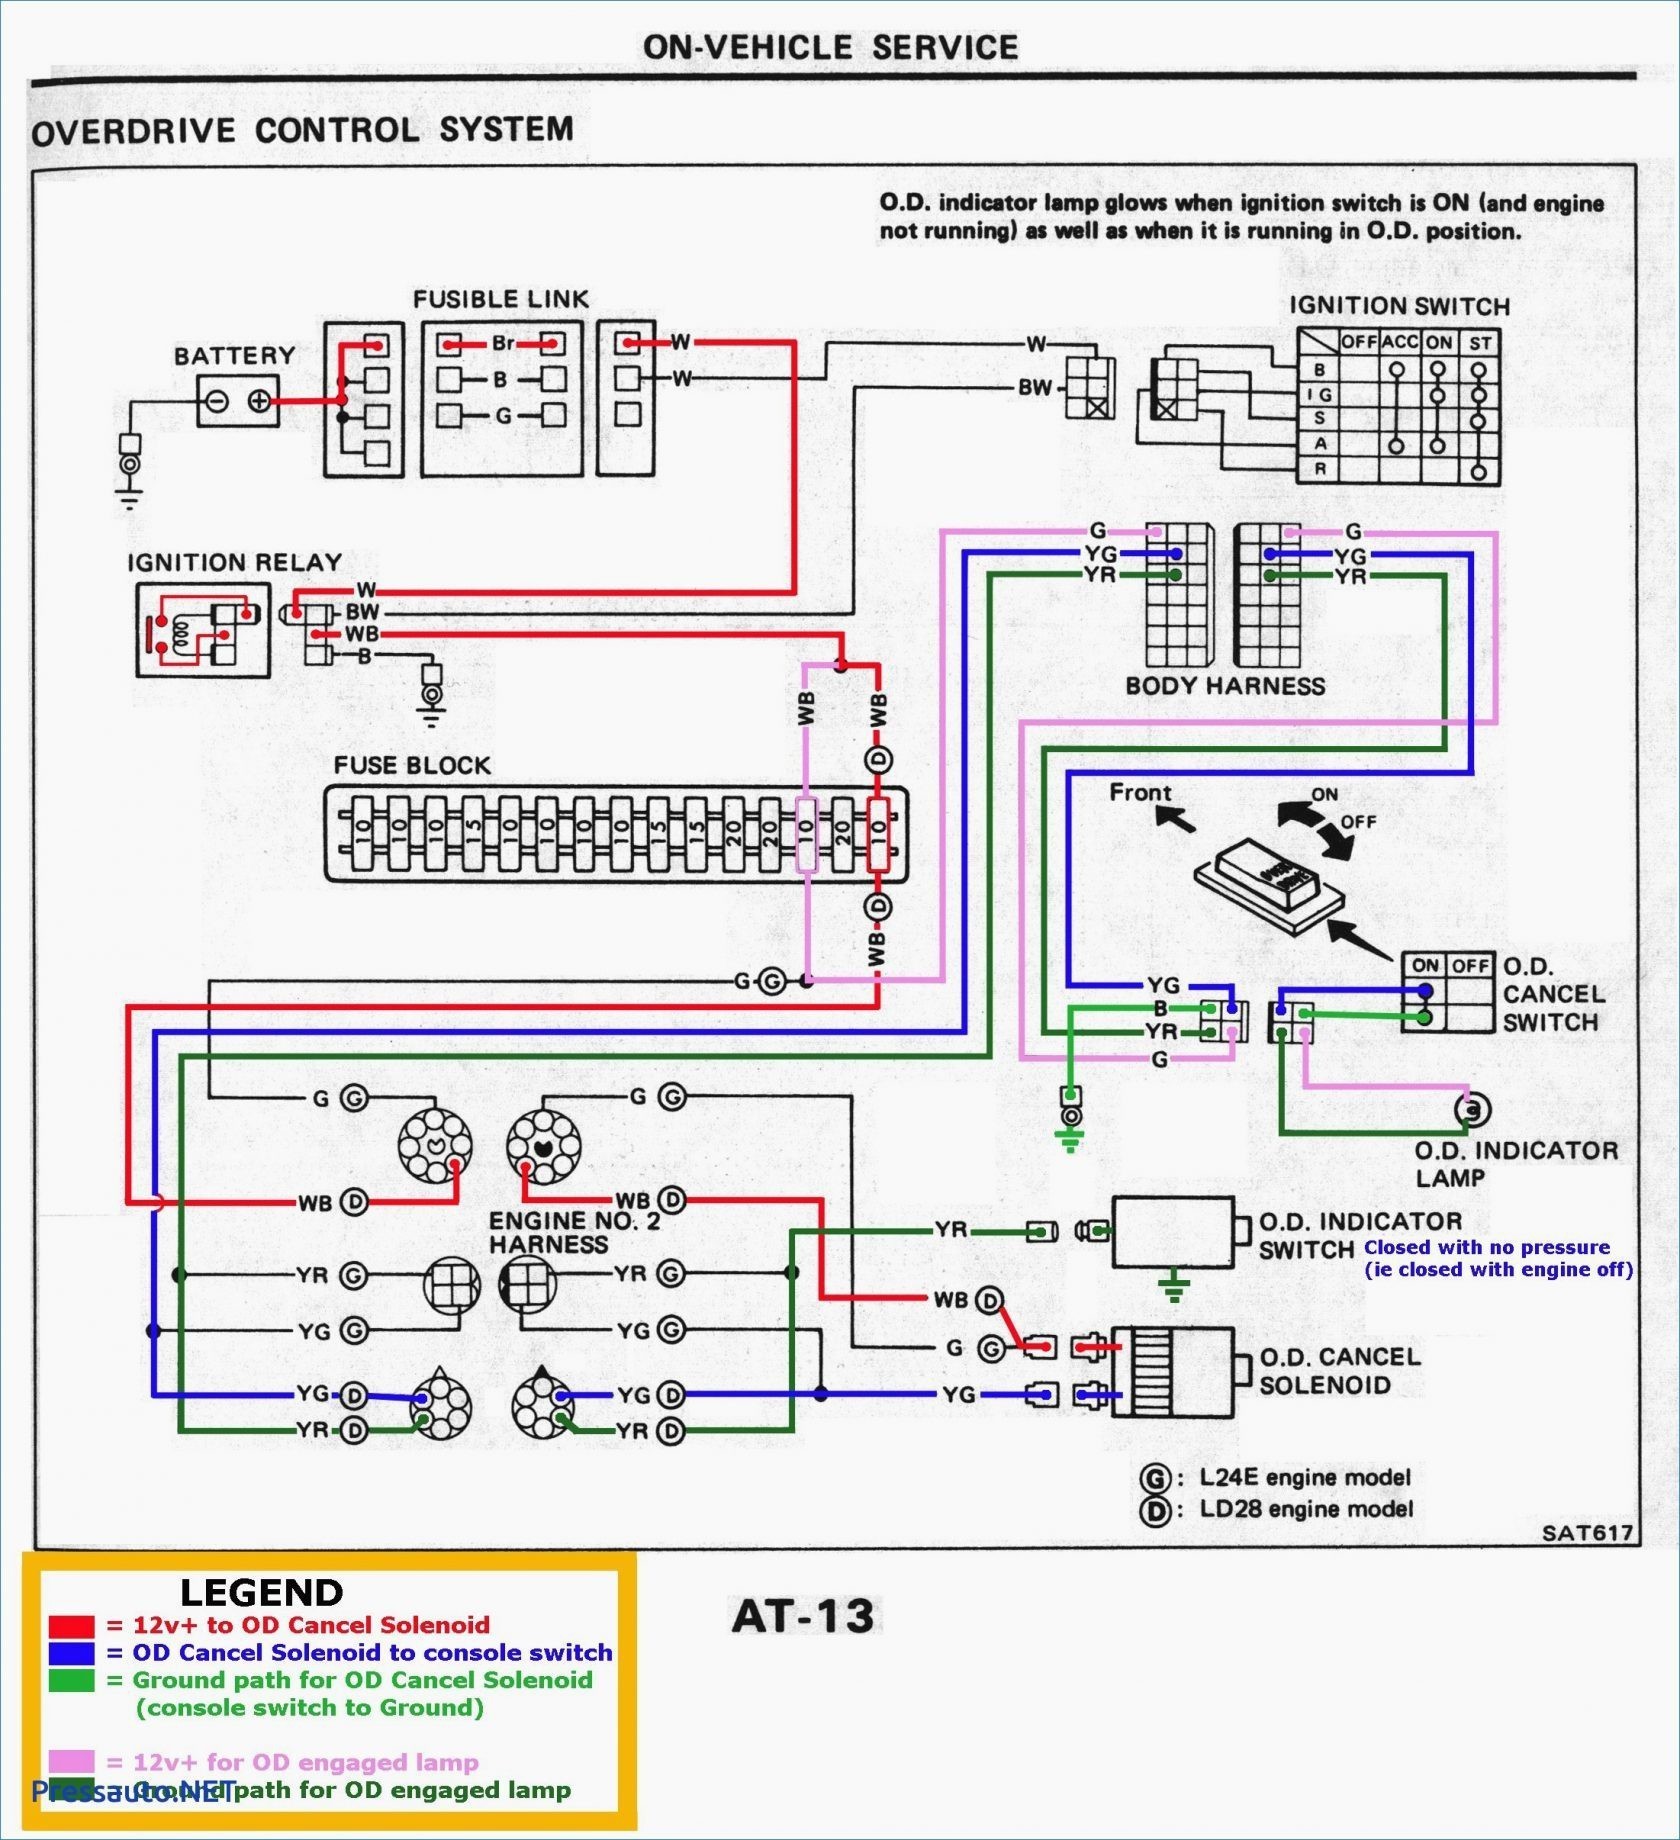 2005 ford Escape Engine Diagram 05 ford Escape Wiring Diagram Wiring Diagram toolbox Of 2005 ford Escape Engine Diagram